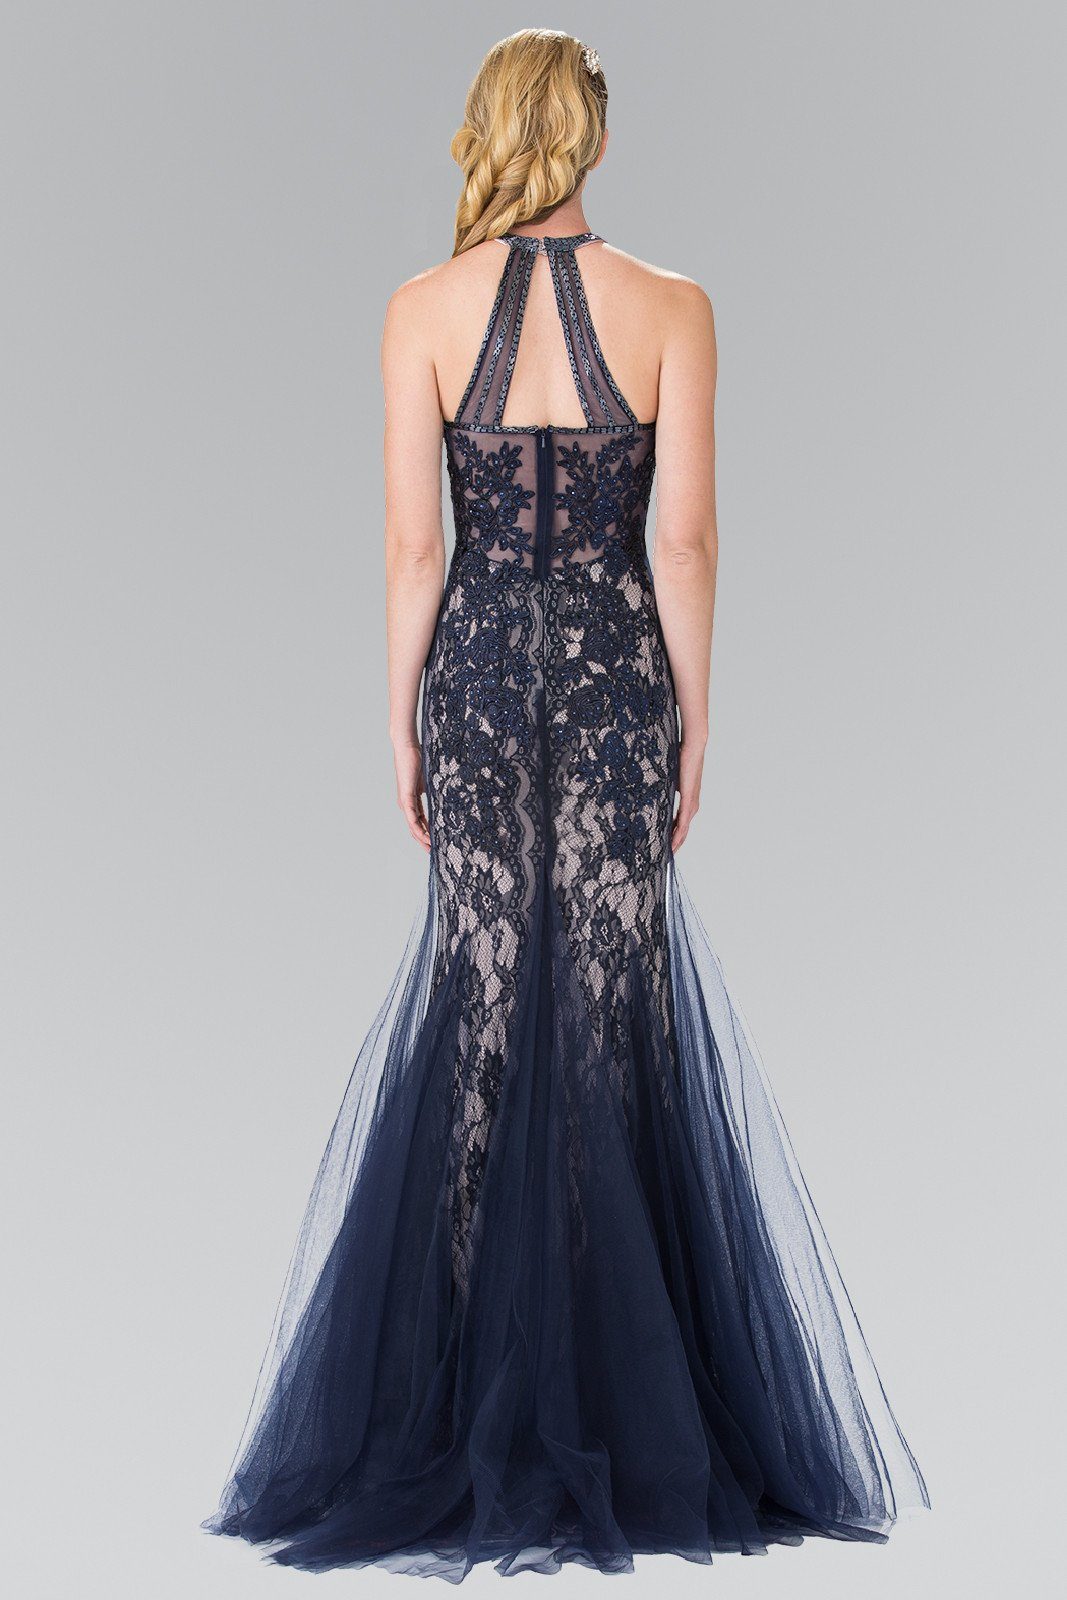 Lace Halter Mermaid Dress by Elizabeth K GL2243-Long Formal Dresses-ABC Fashion